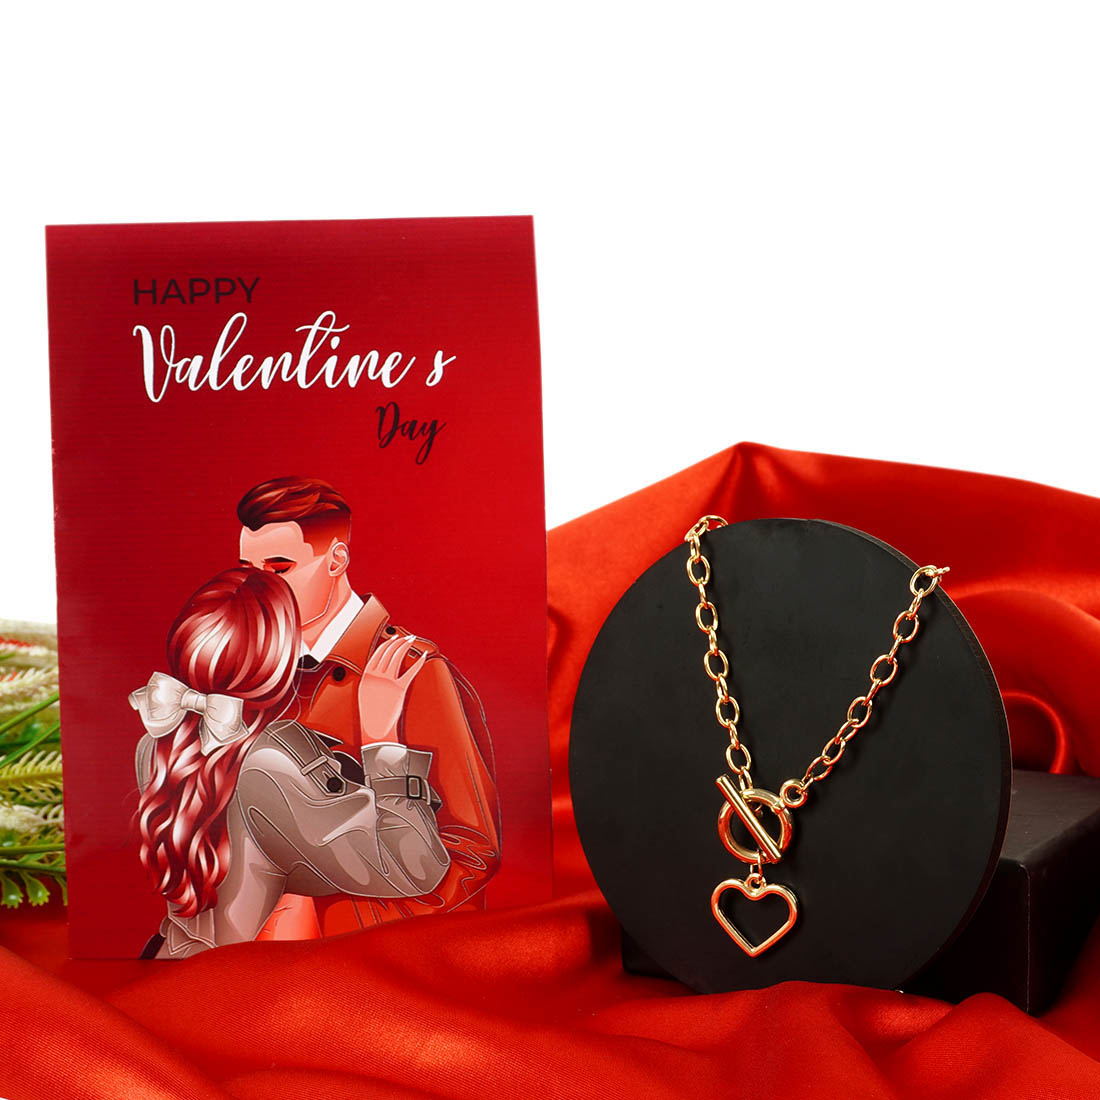 Buy online gifts to stun pleasurably on her birthday – GiftaLove.com